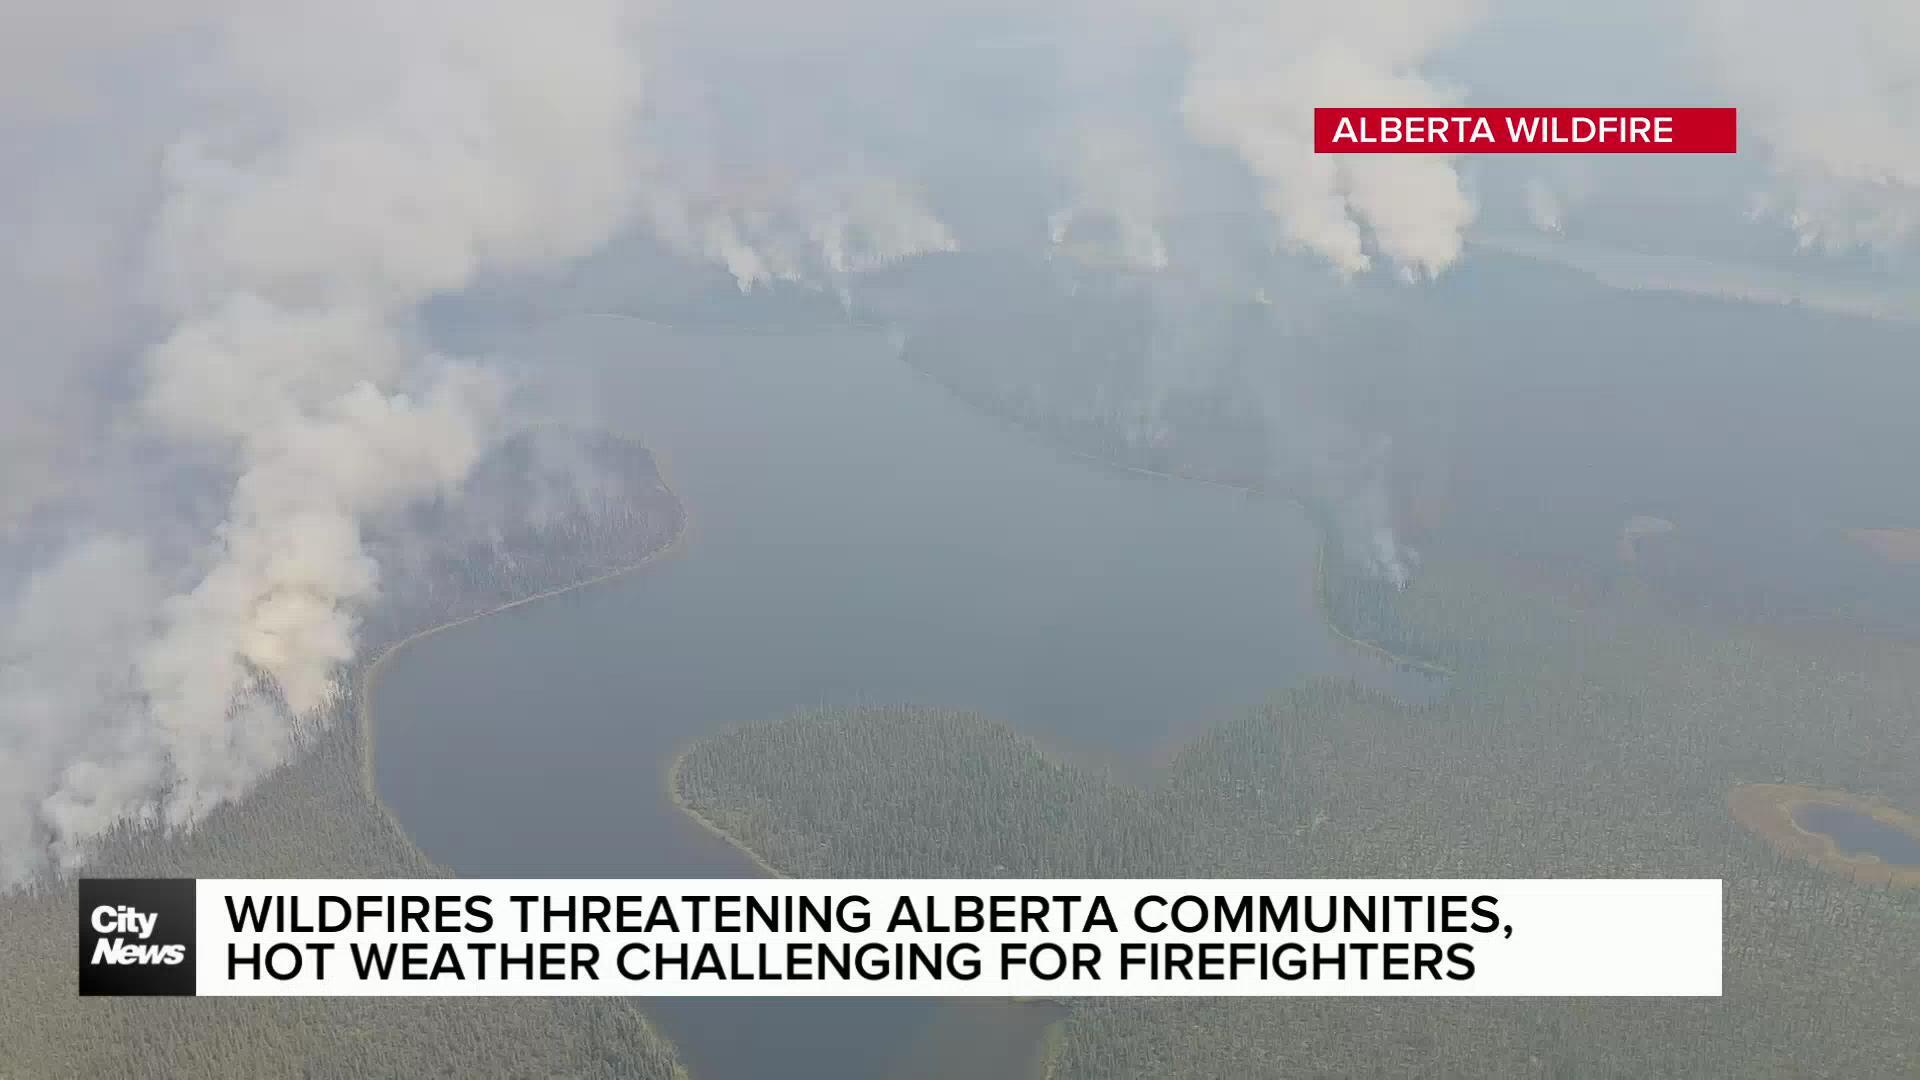 Wildfires threatening Alberta communities, heat wave challenge for firefighters